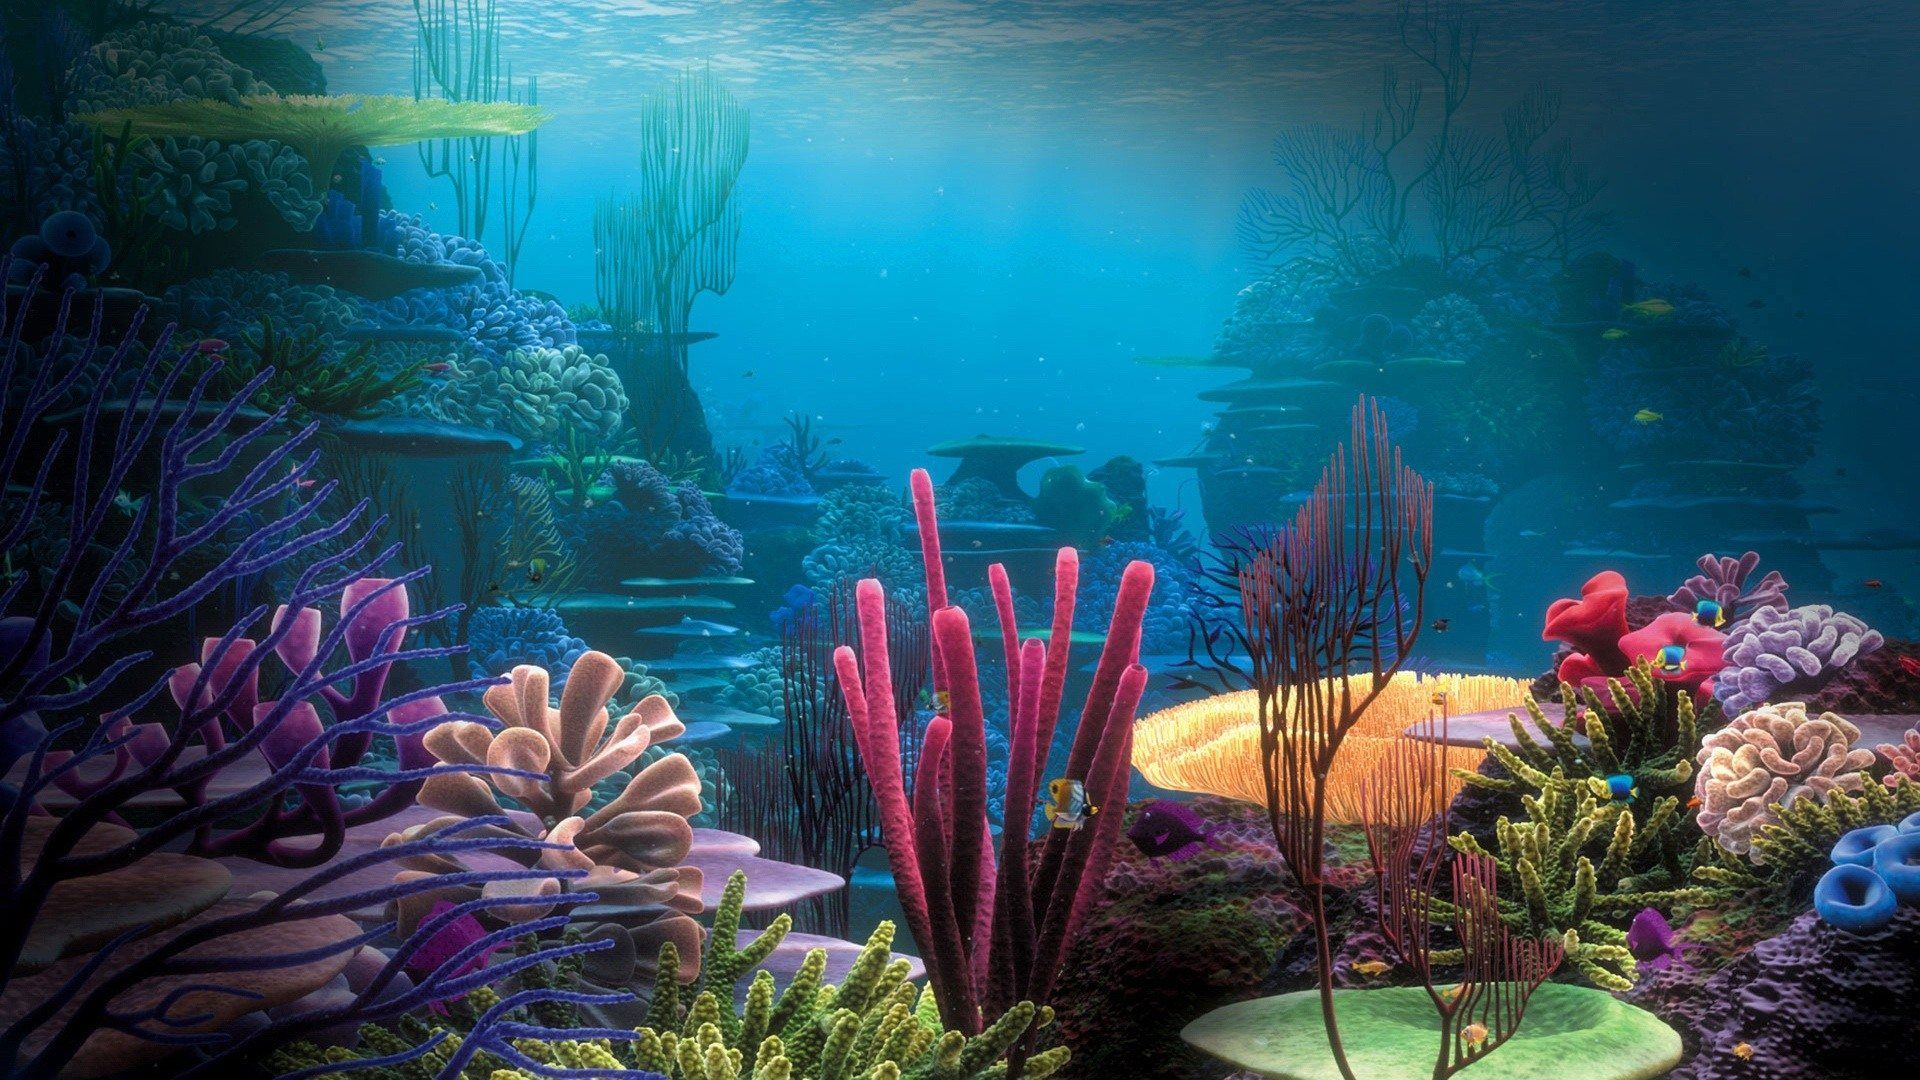 1920x1080 Underwater Coral Reef wallpapers HD free 294550 | Fundos de aqu&Atilde;&iexcl;rio, Painel fundo do mar, Fotos subaqu&Atilde;&iexcl;ticas